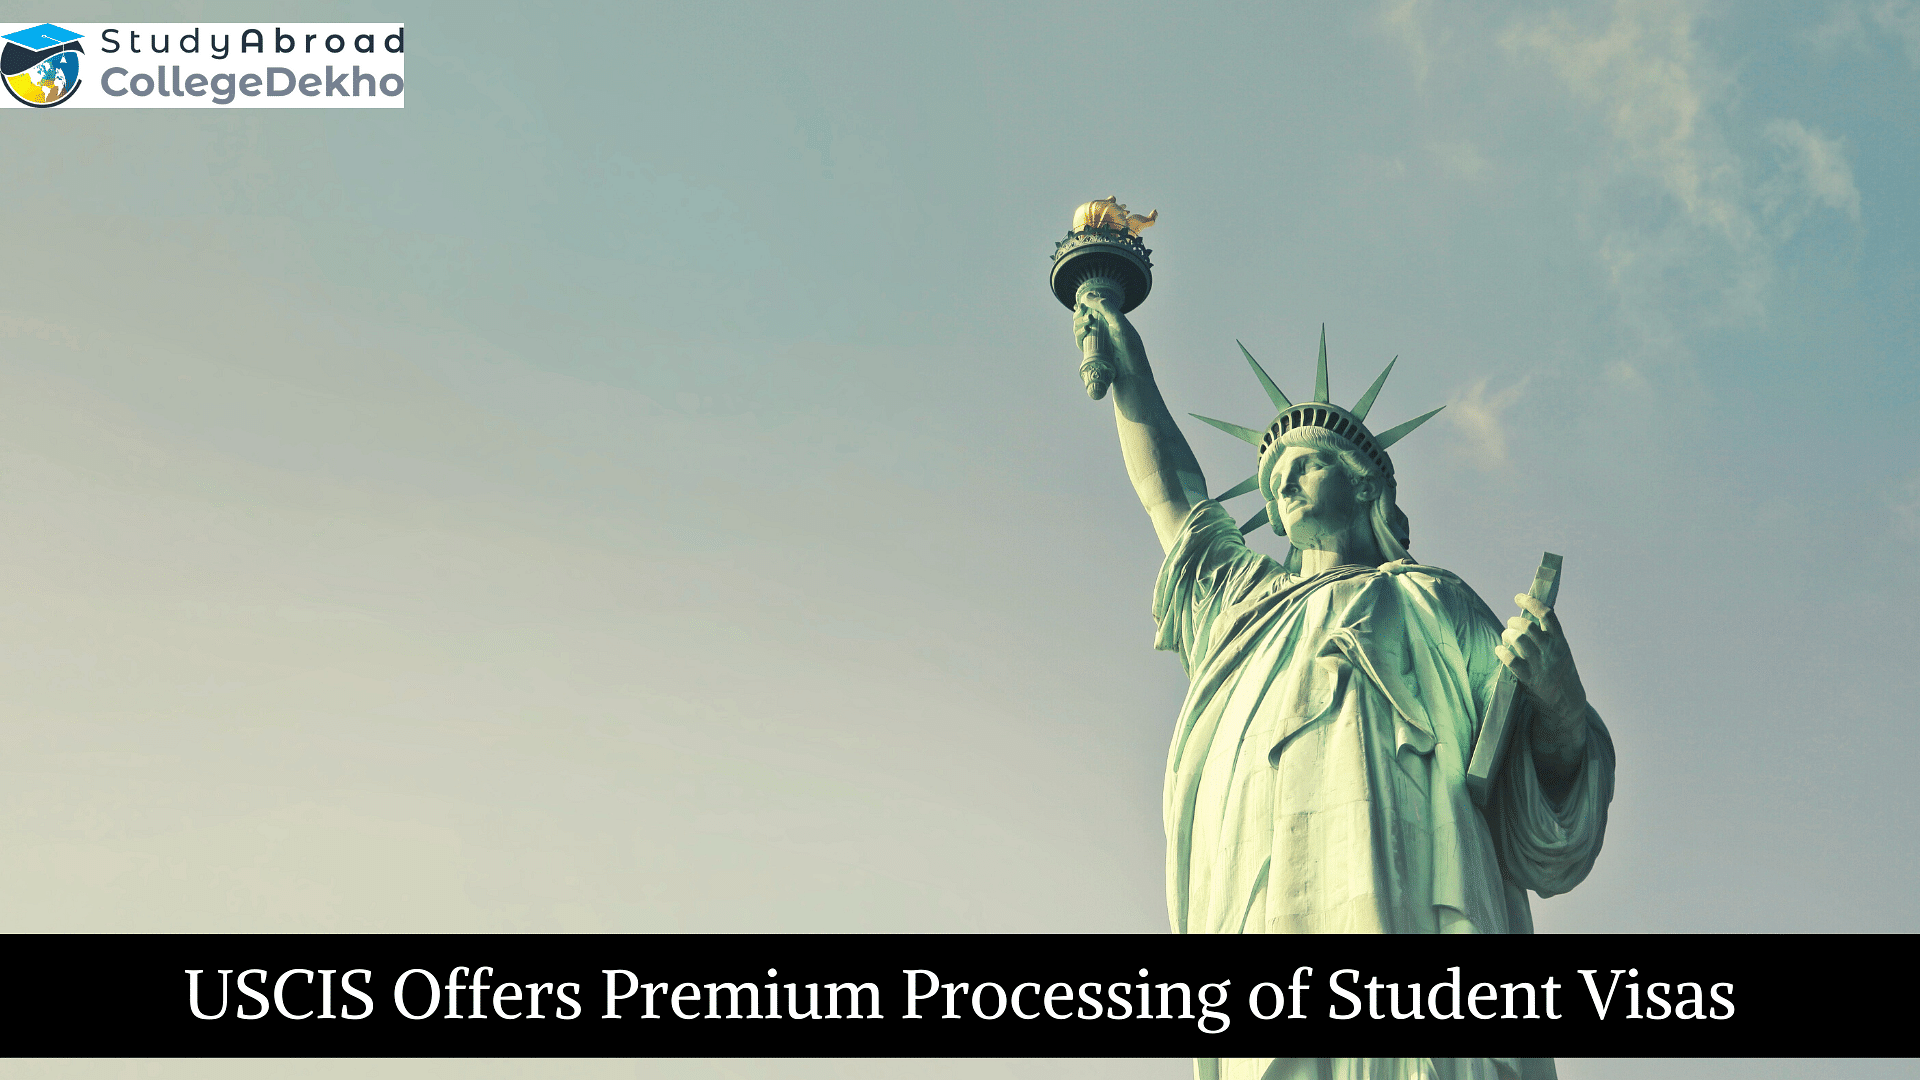 USCIS Offers Premium Processing of Student Visas